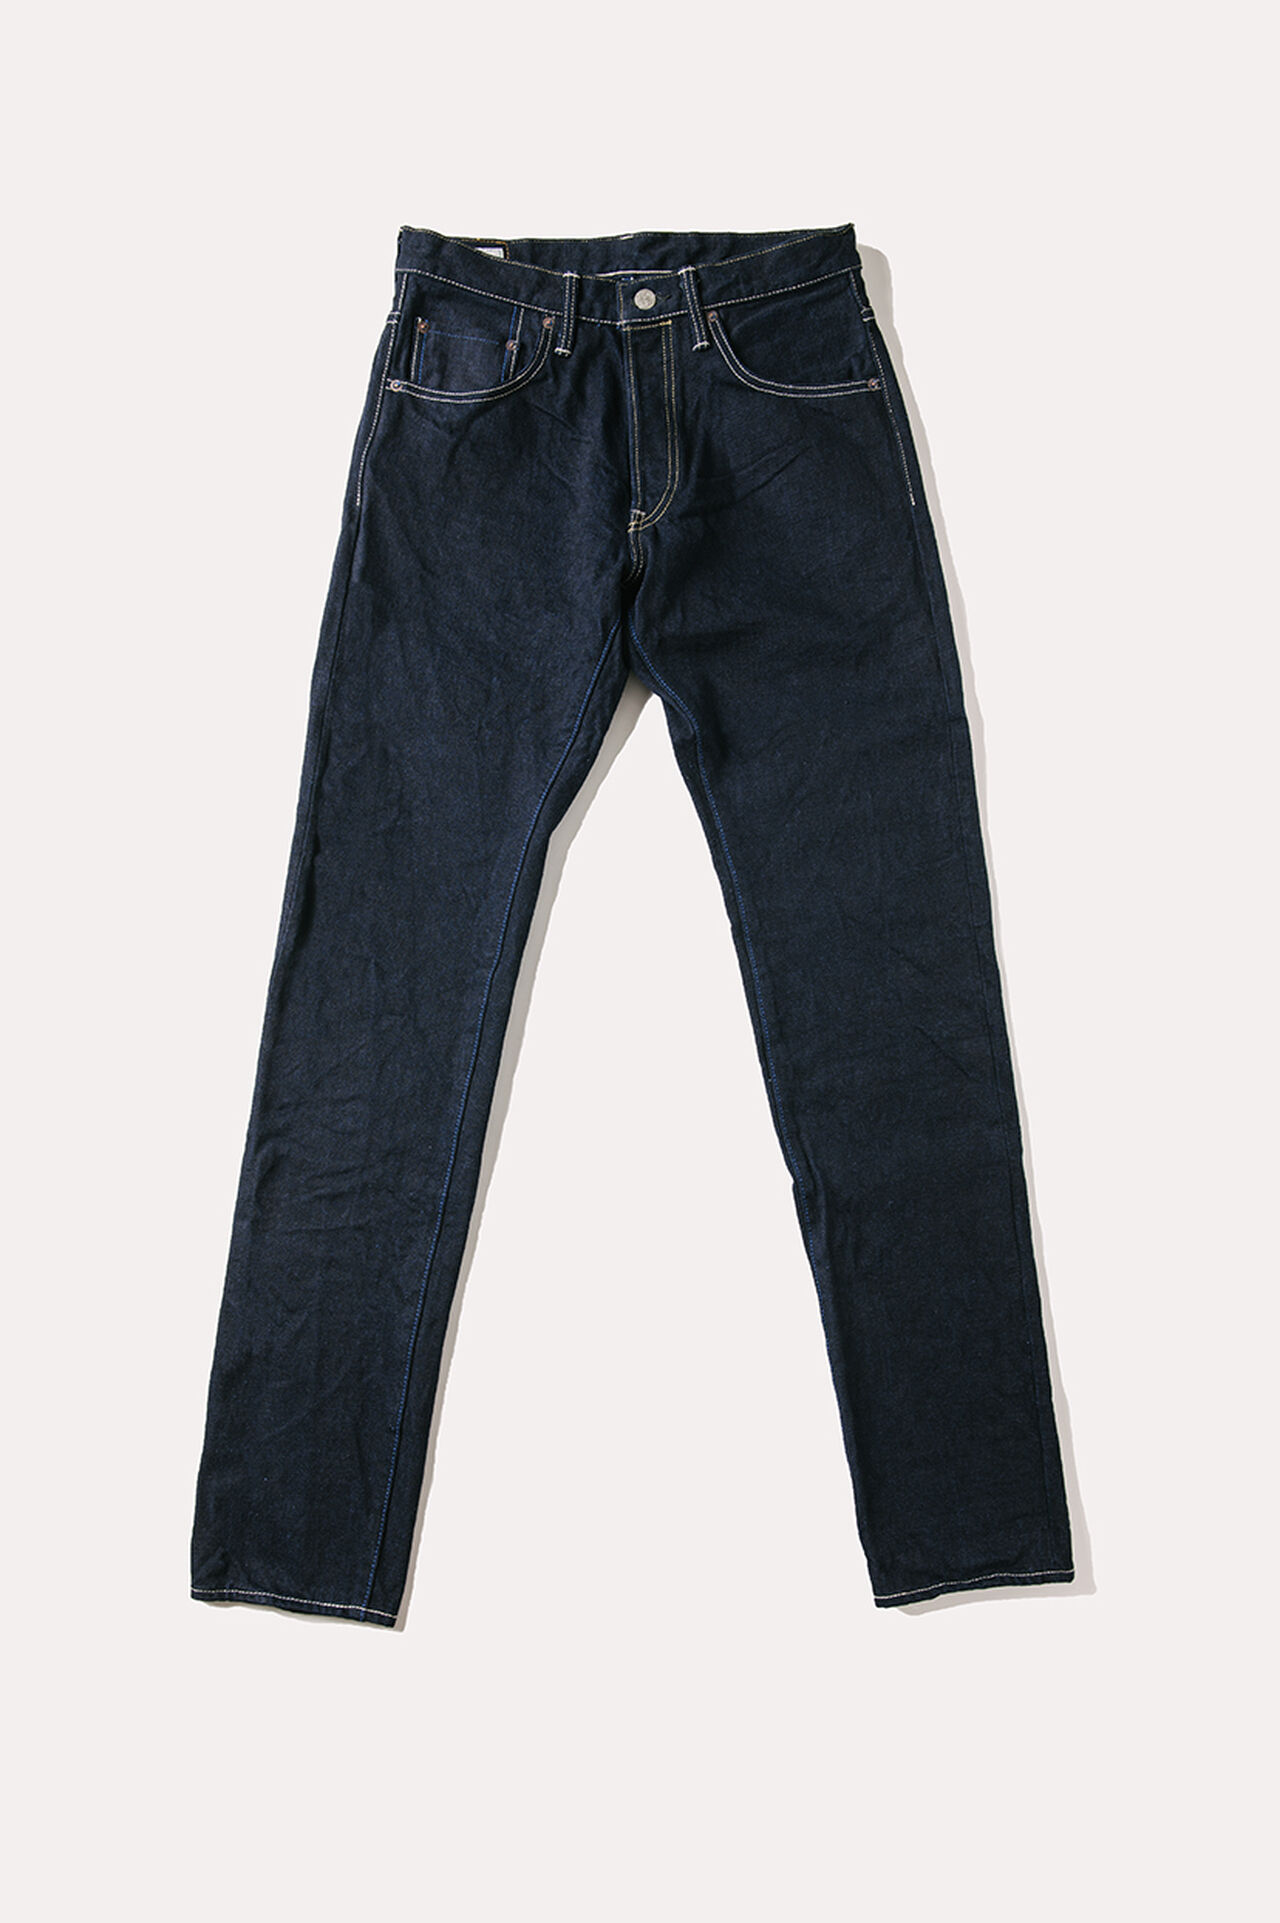 YUHT 16.5oz Natural Indigo "Yurai" High Tapered Jeans,, large image number 10